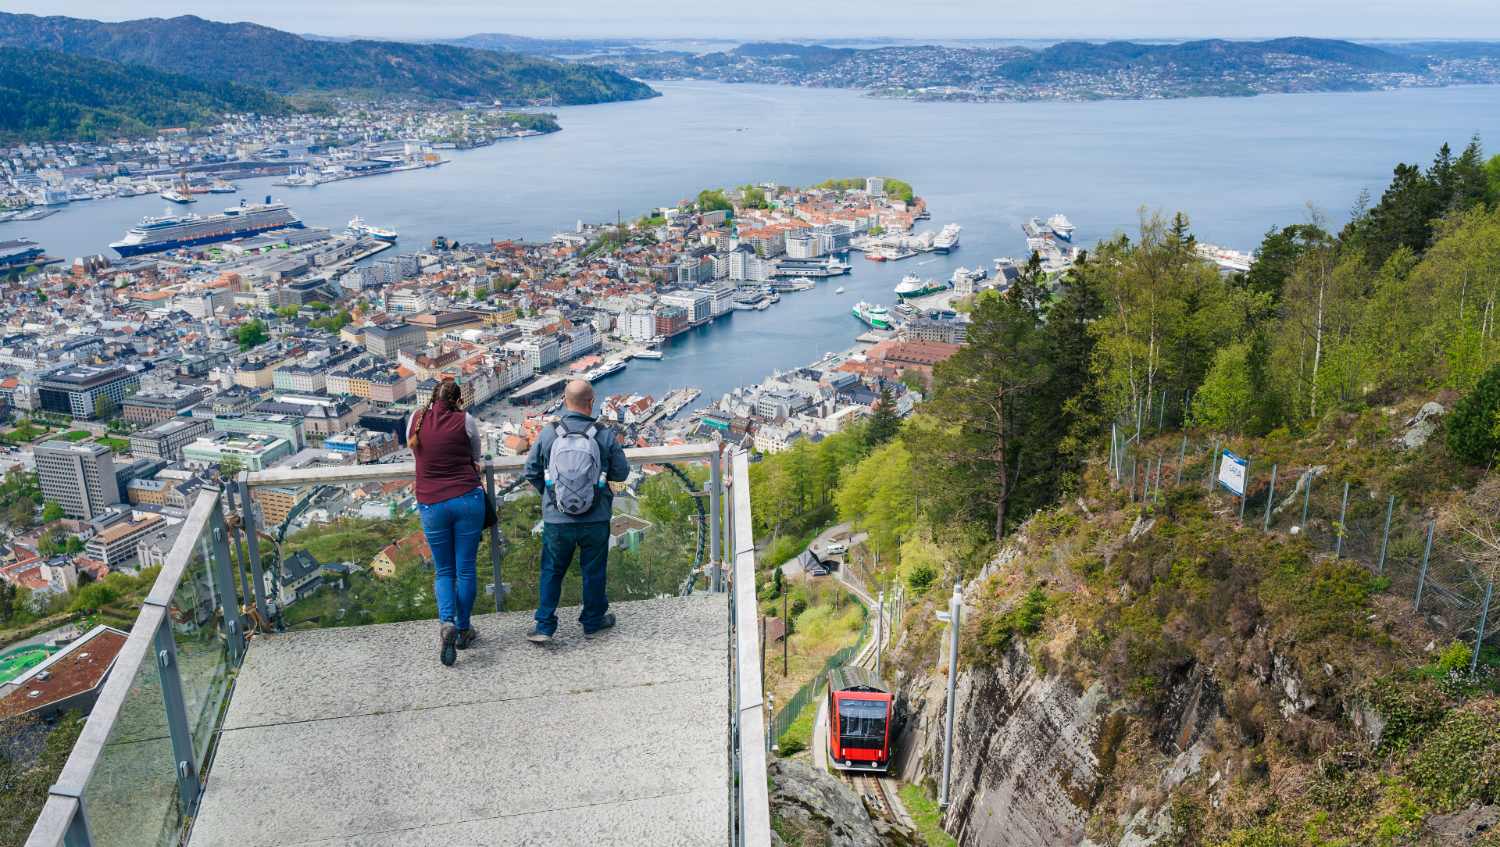 Things to do in Bergen - hiking at Fløyen